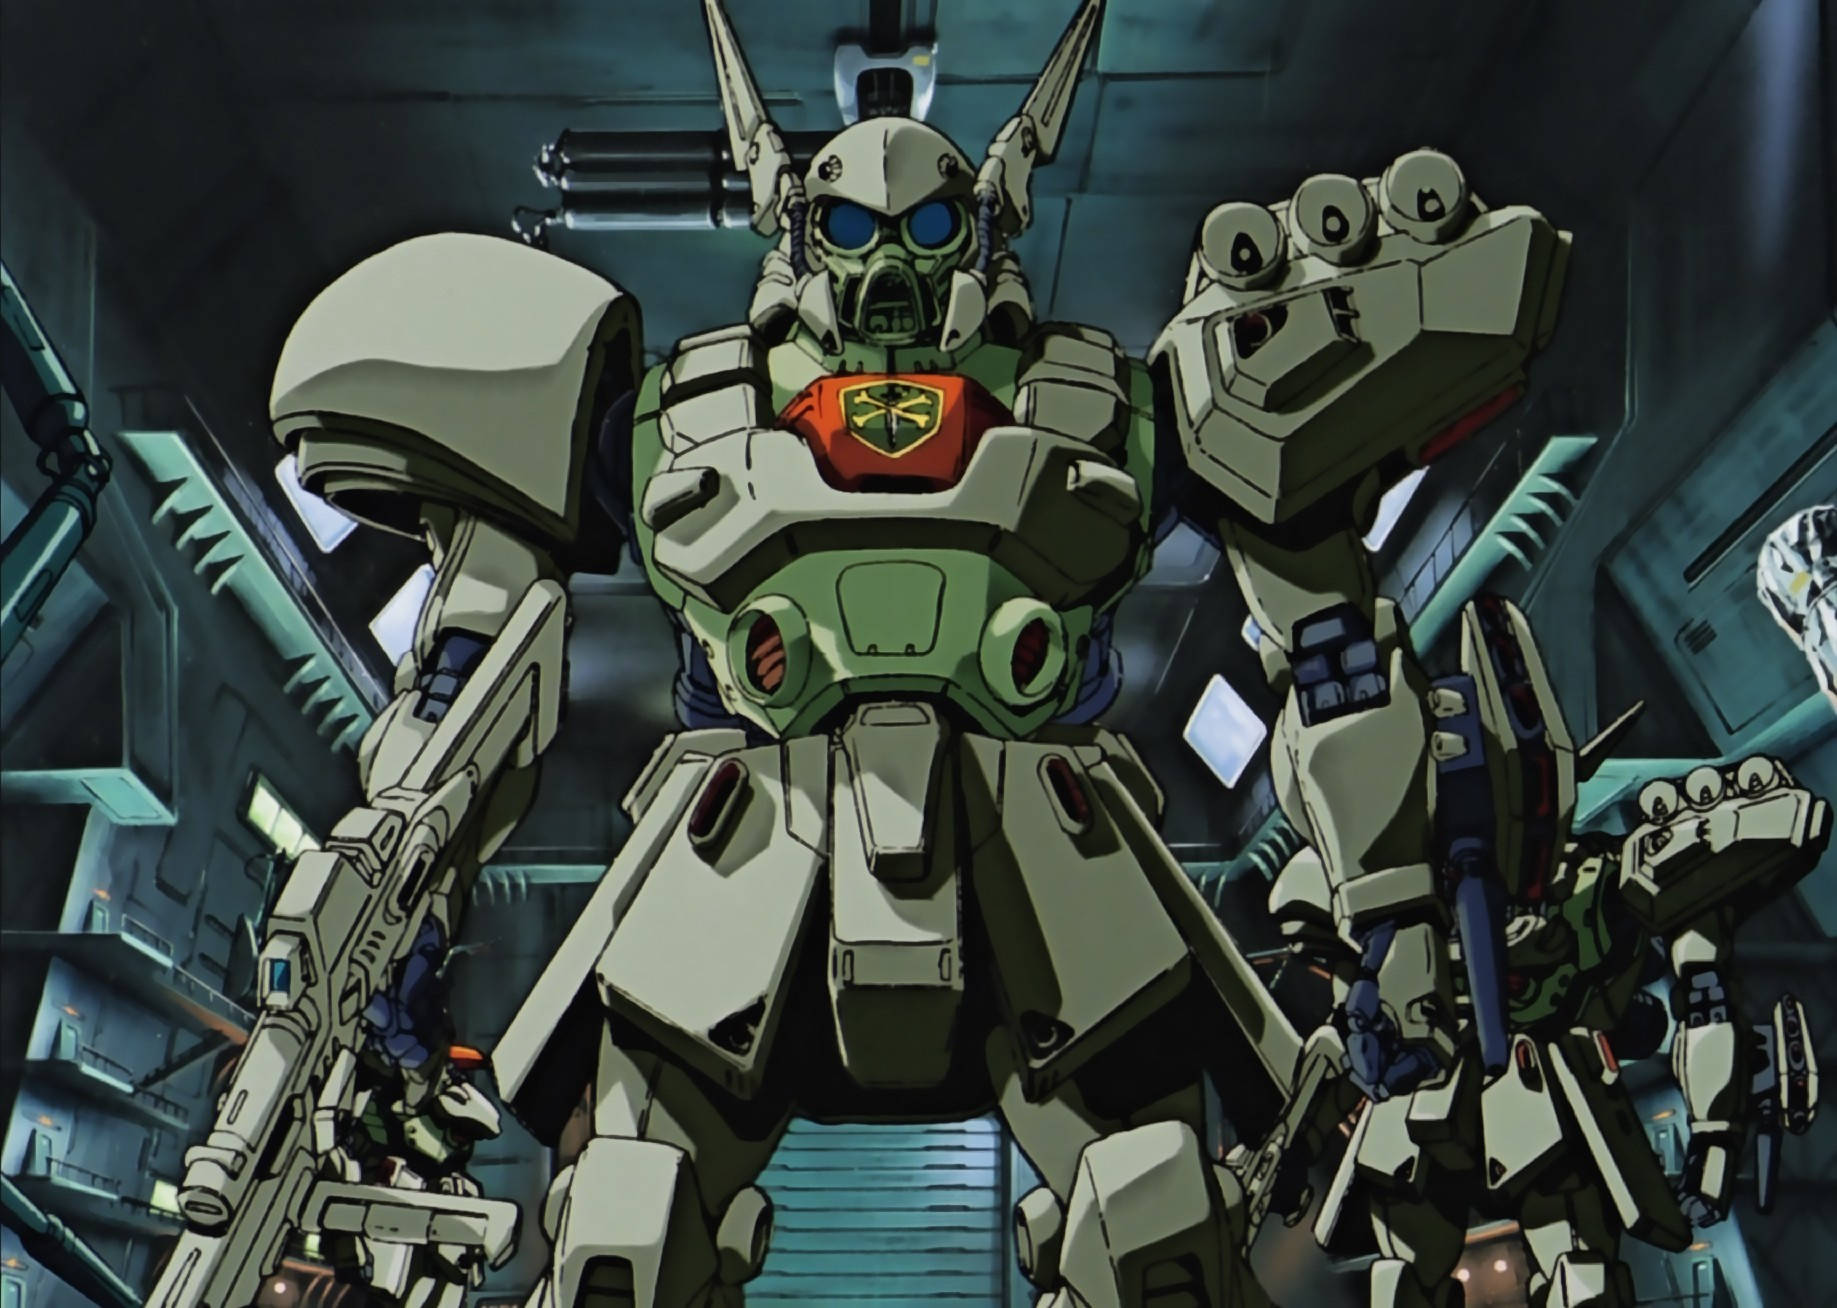 Epic Duel In Space - Mobile Suit Gundam Enemies Background